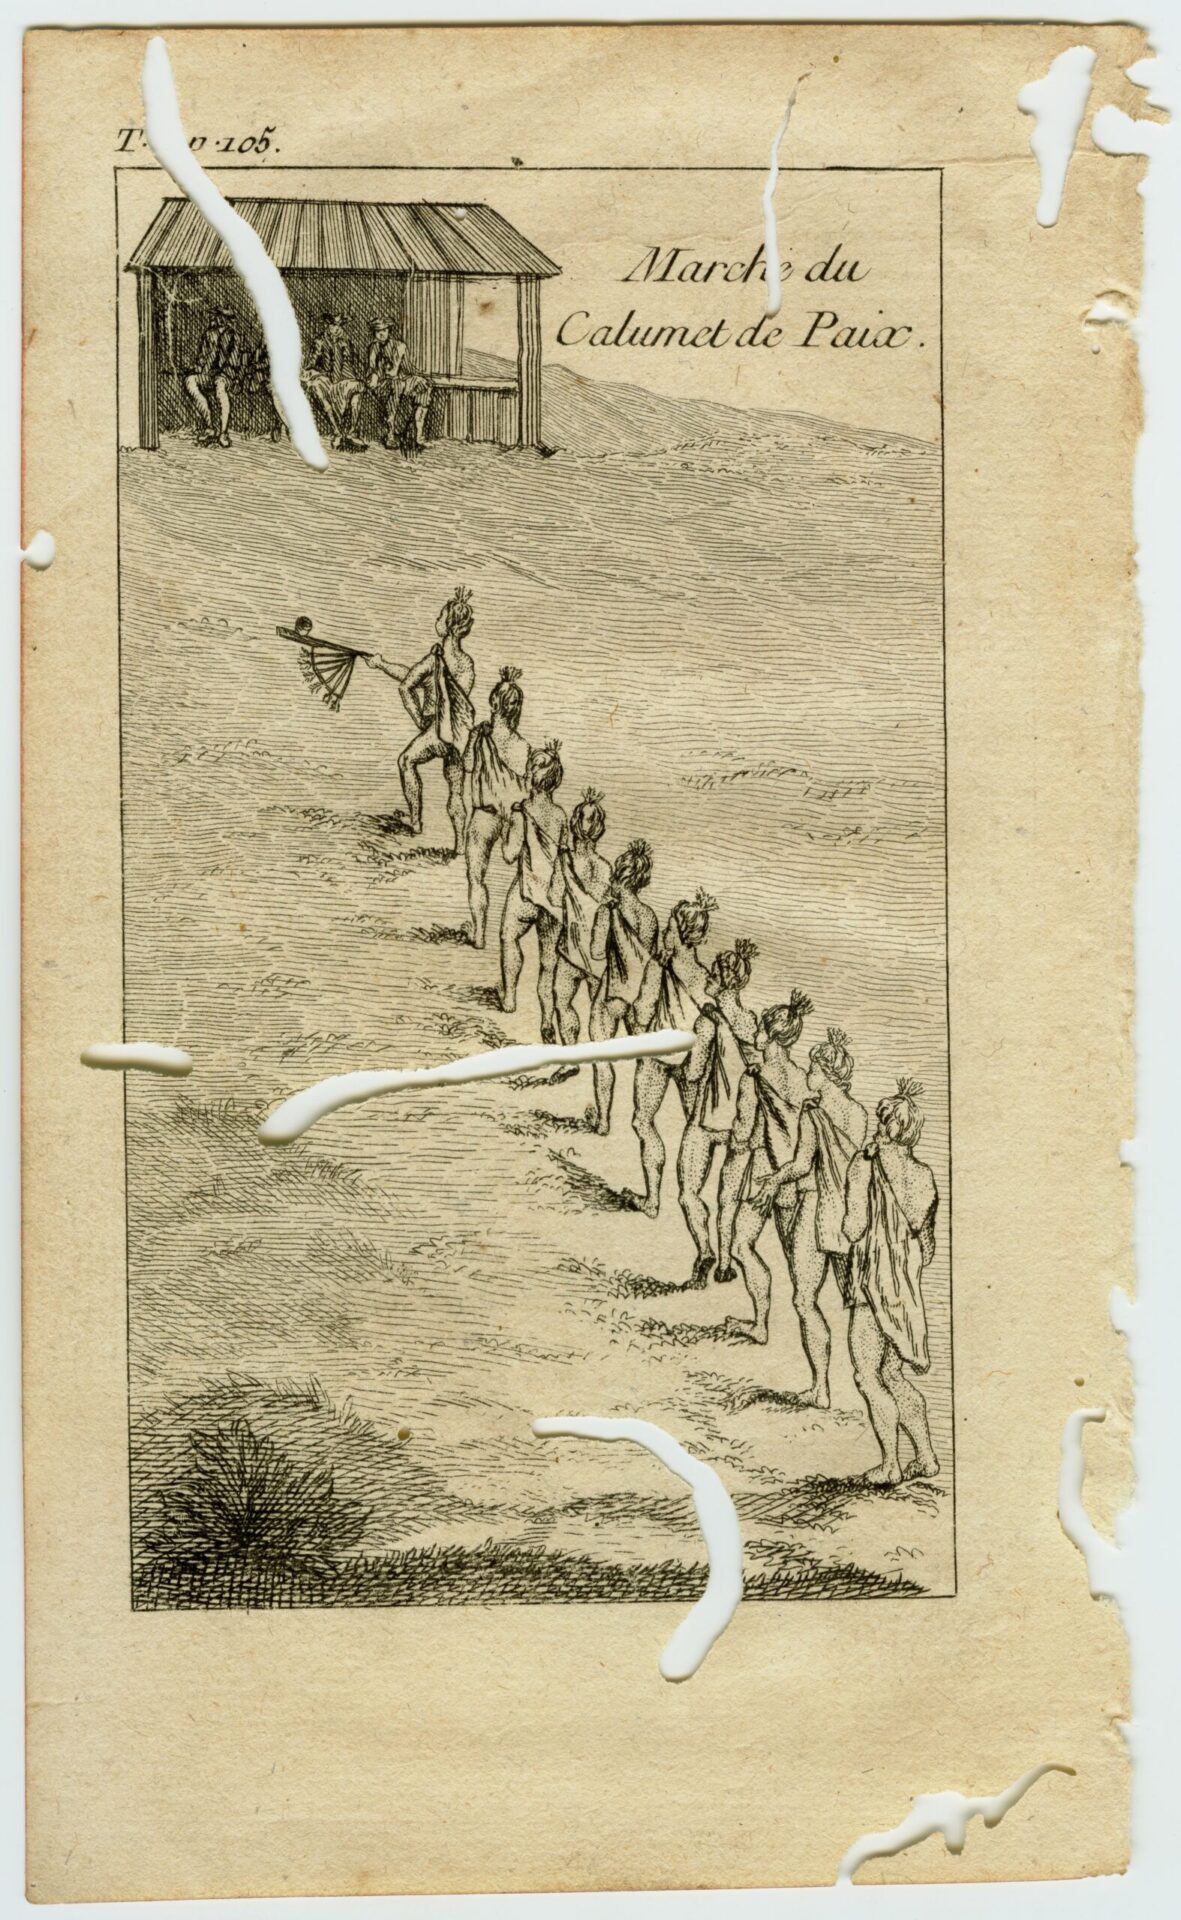 Marche du Calumet de Paix, 1758